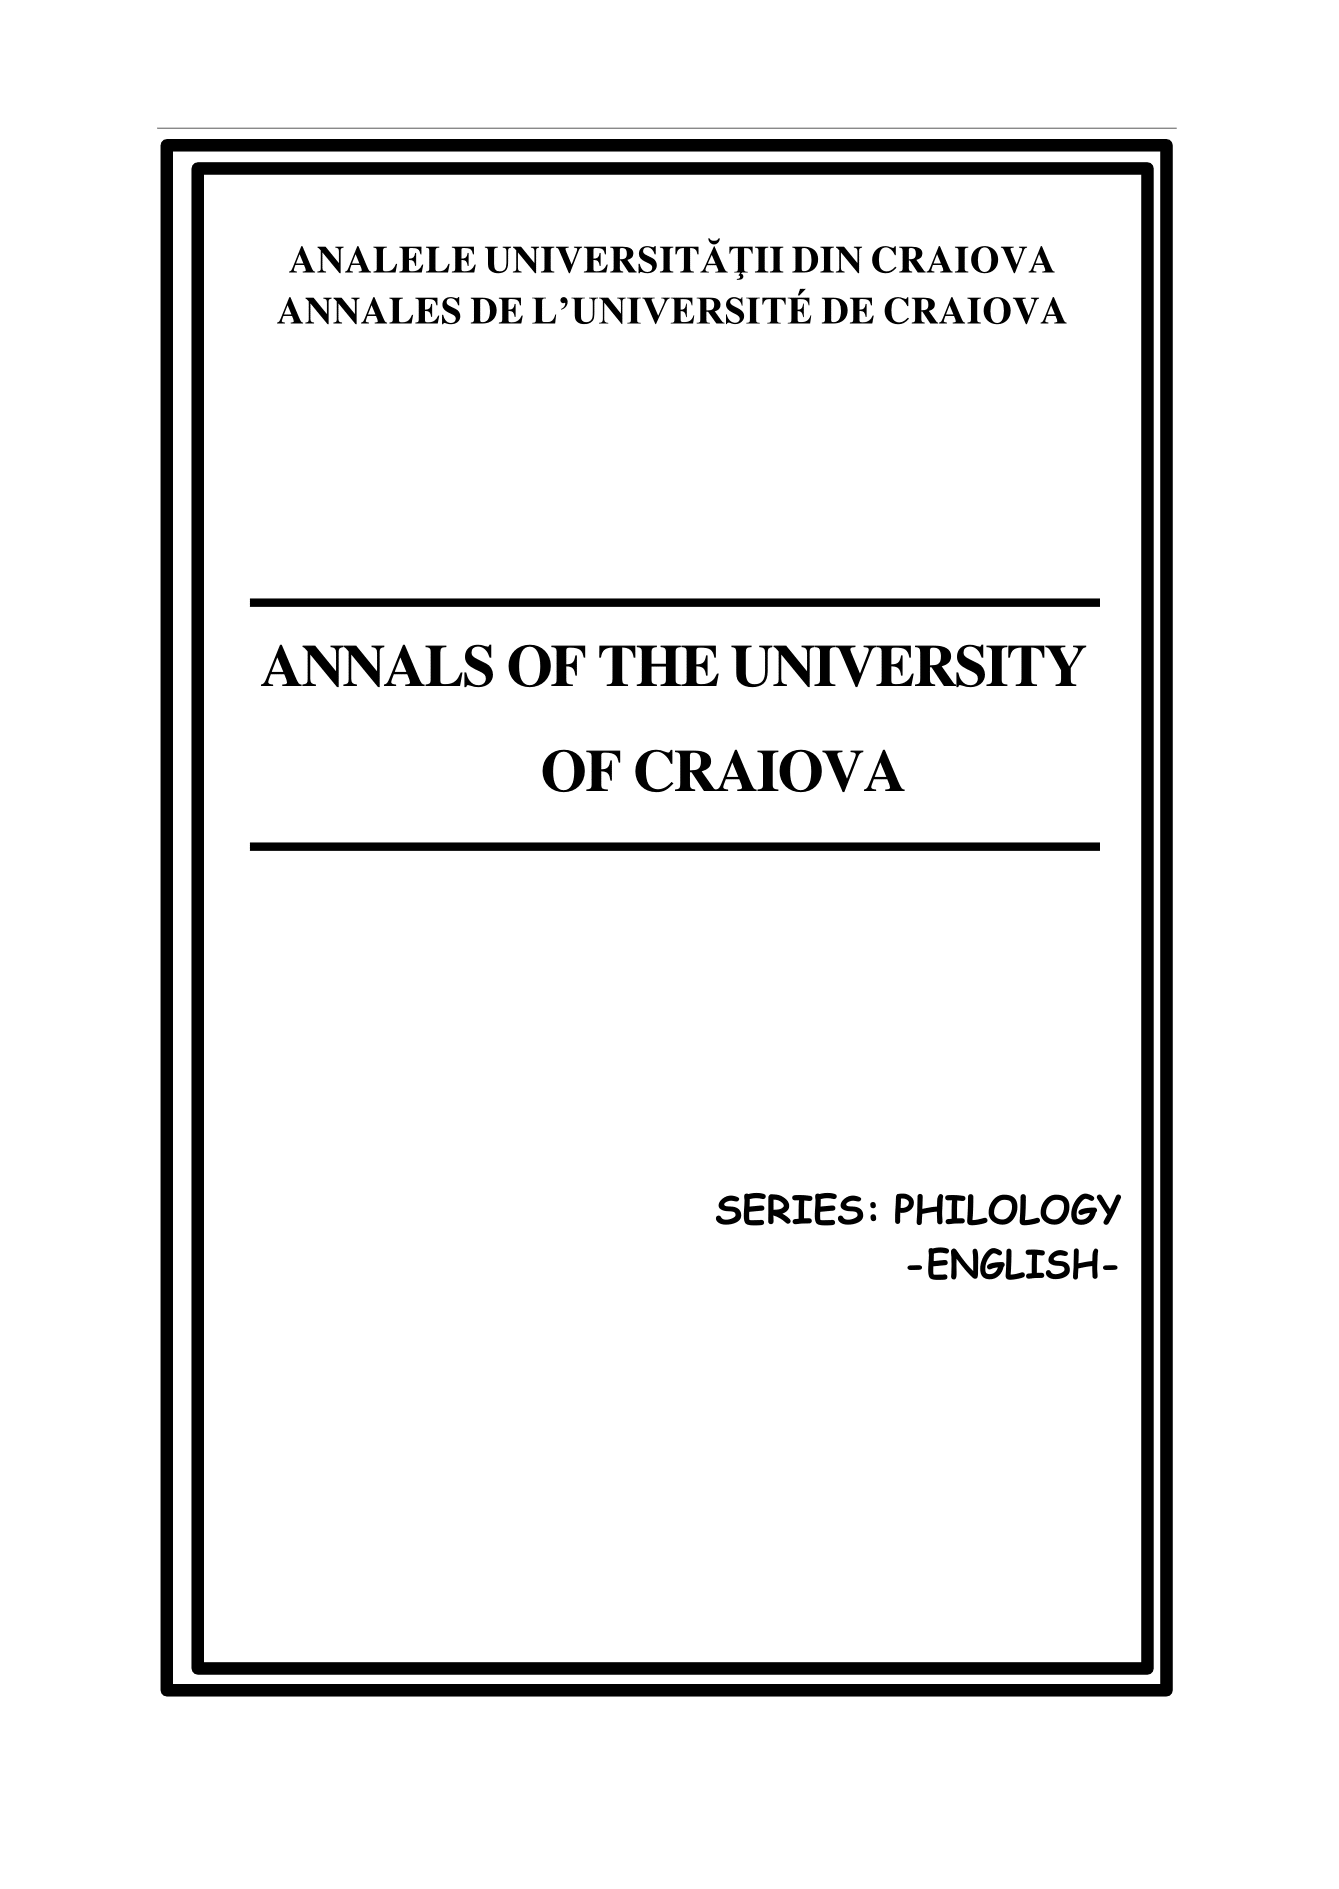 Annals of the University of Craiova, Series: Philology, English